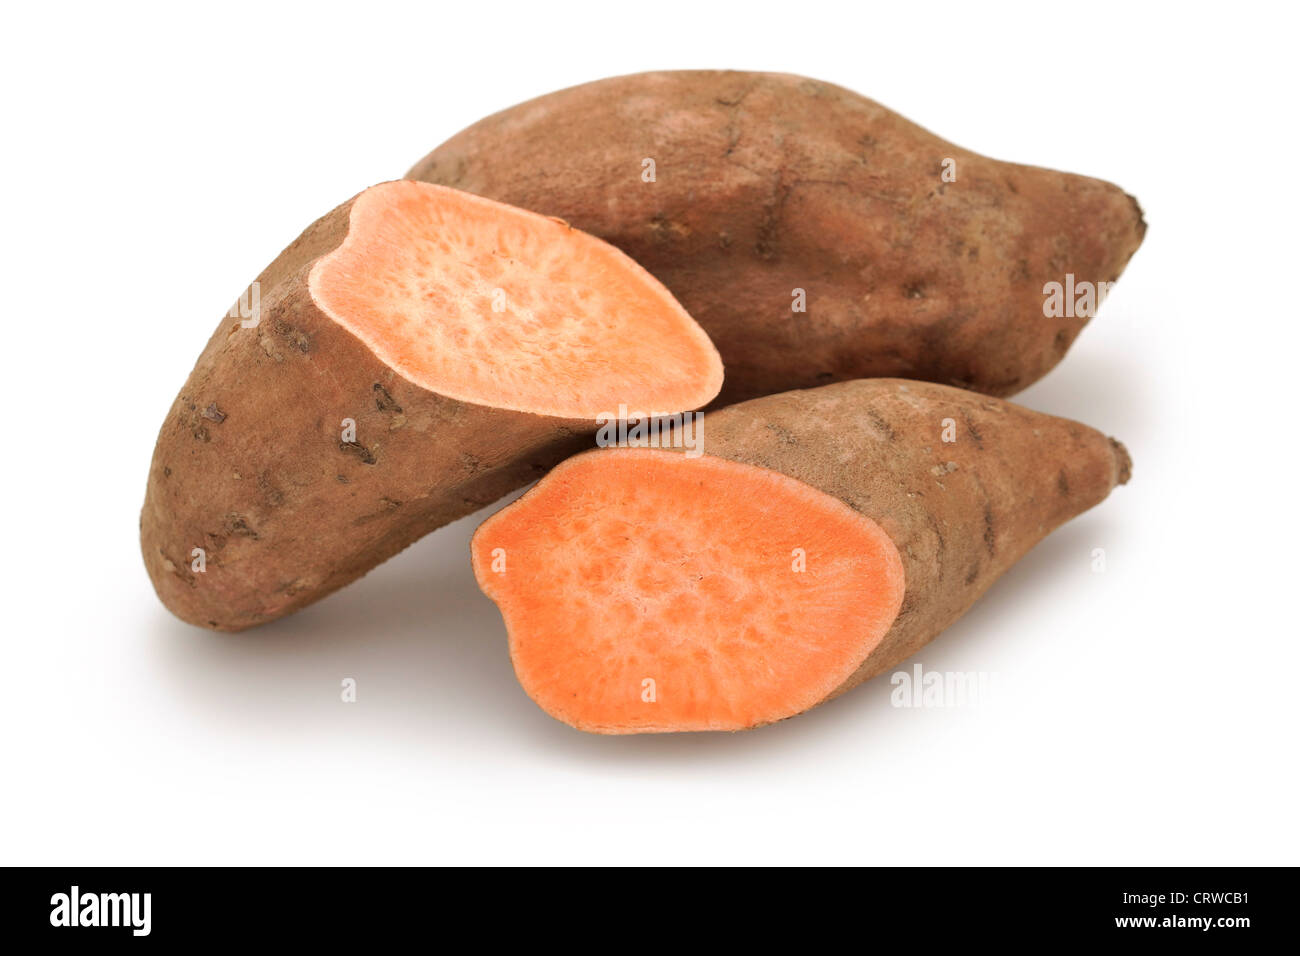 Süße Kartoffeln, Süßkartoffeln, Yams, Süßkartoffeln, Orange weiter ausgearbeitet Stockfoto